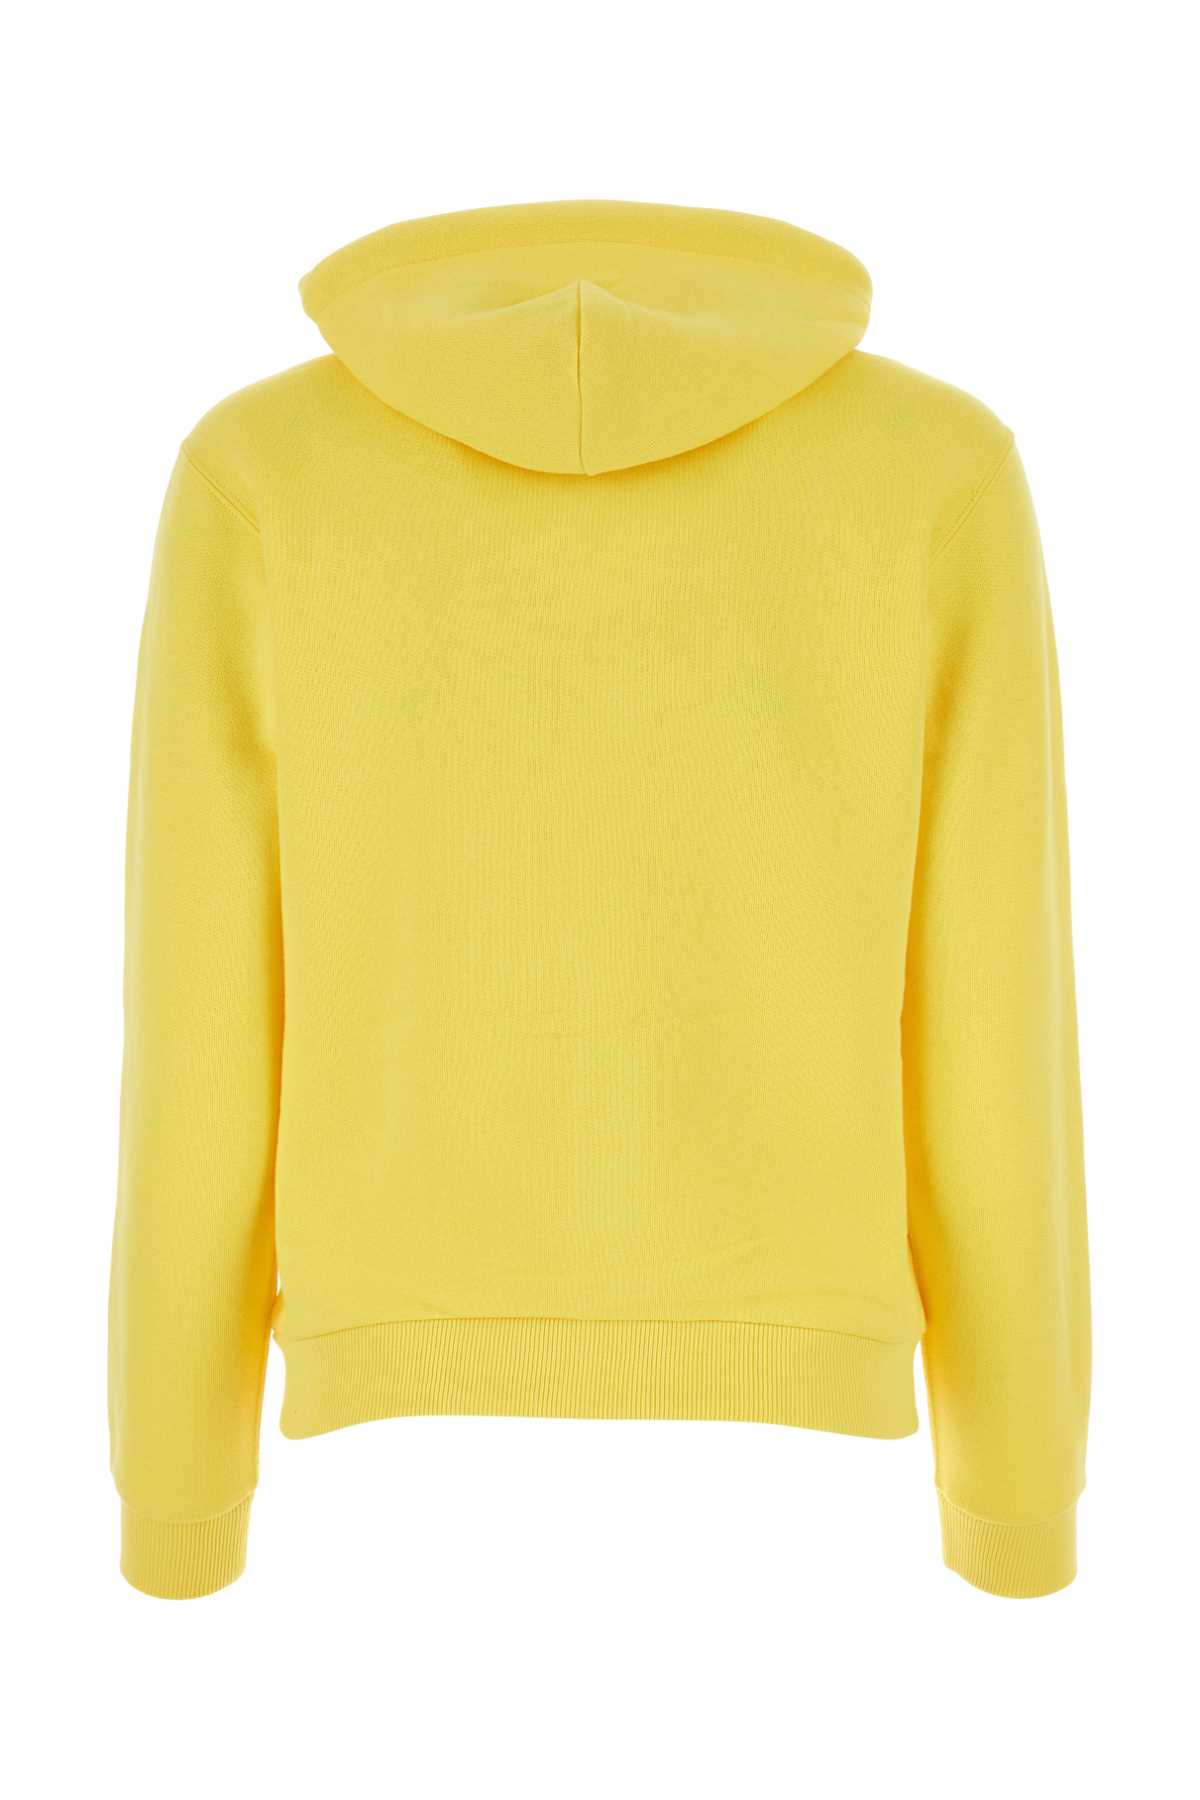 Polo Ralph Lauren Yellow Cotton Blend Sweatshirt In Coastalyellow